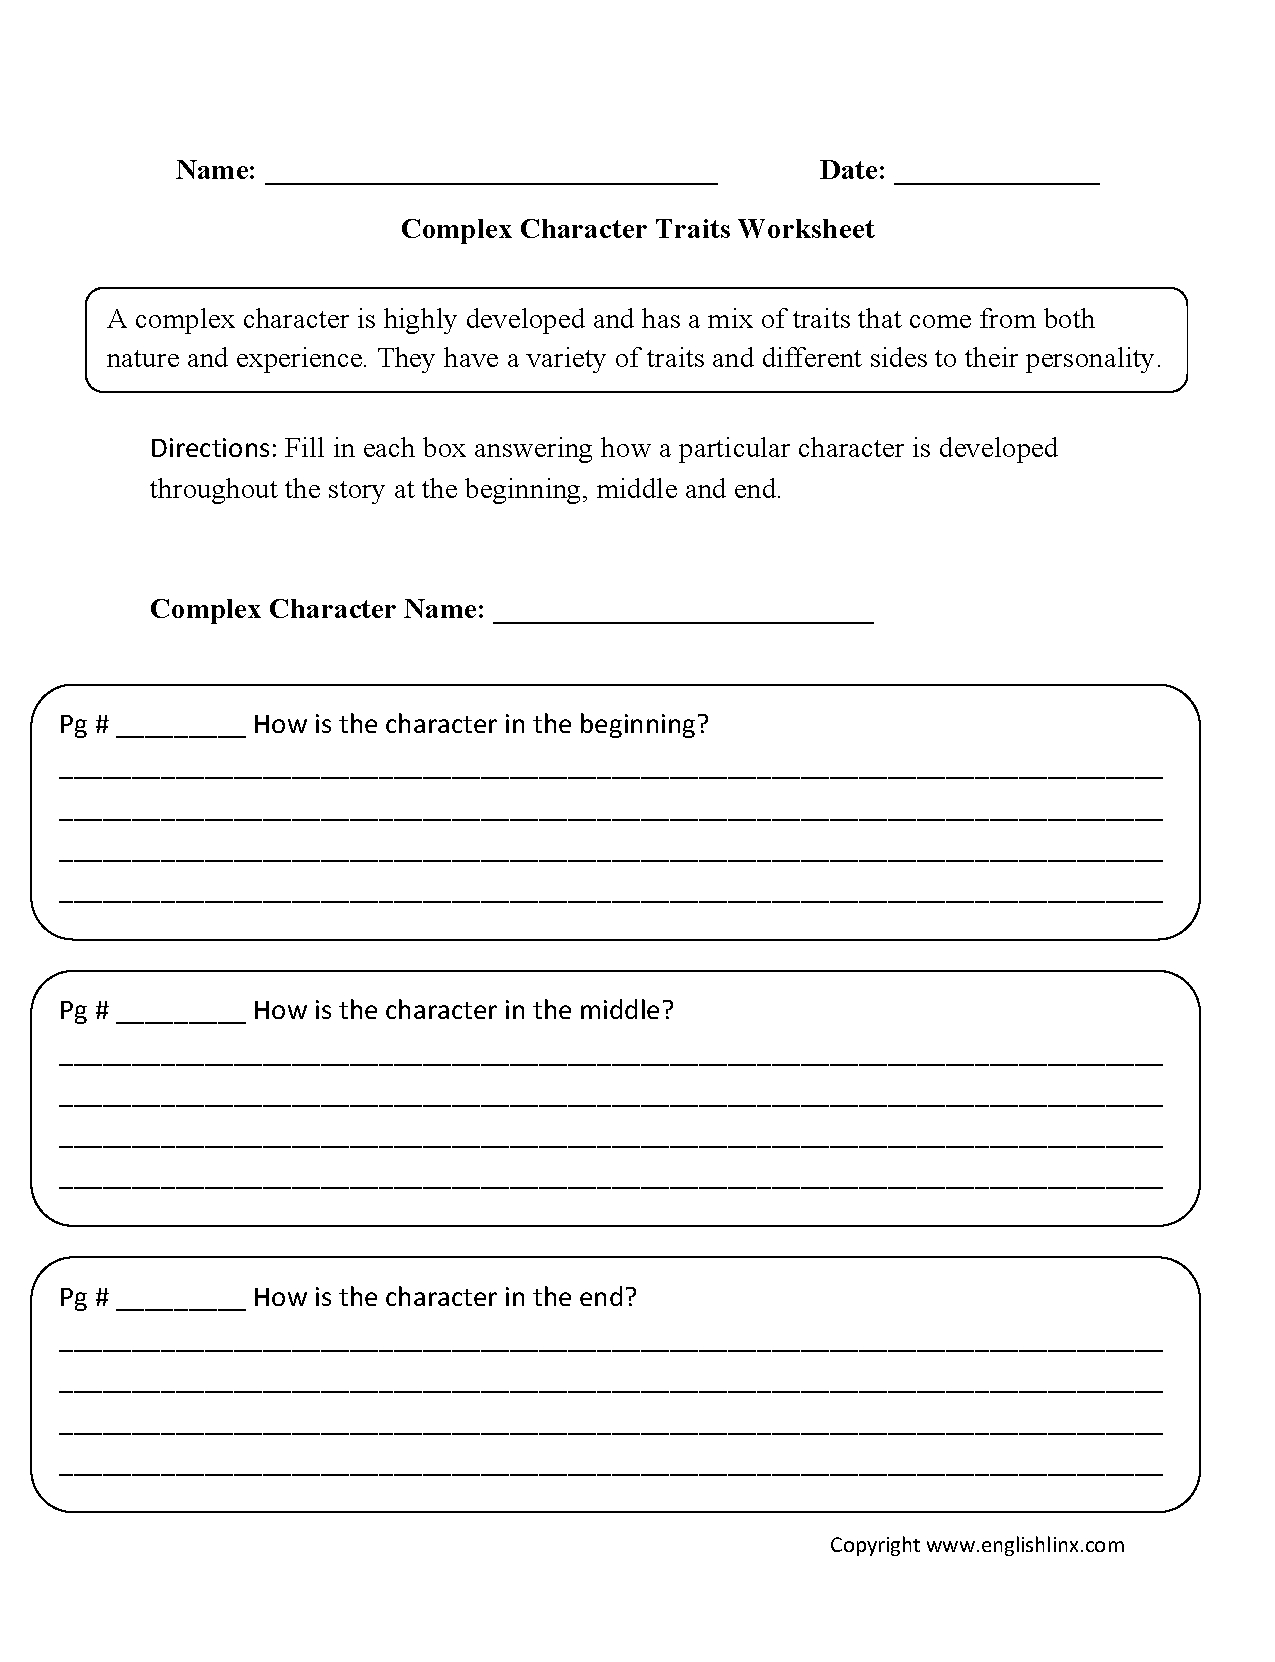 character-traits-worksheet-grade-2